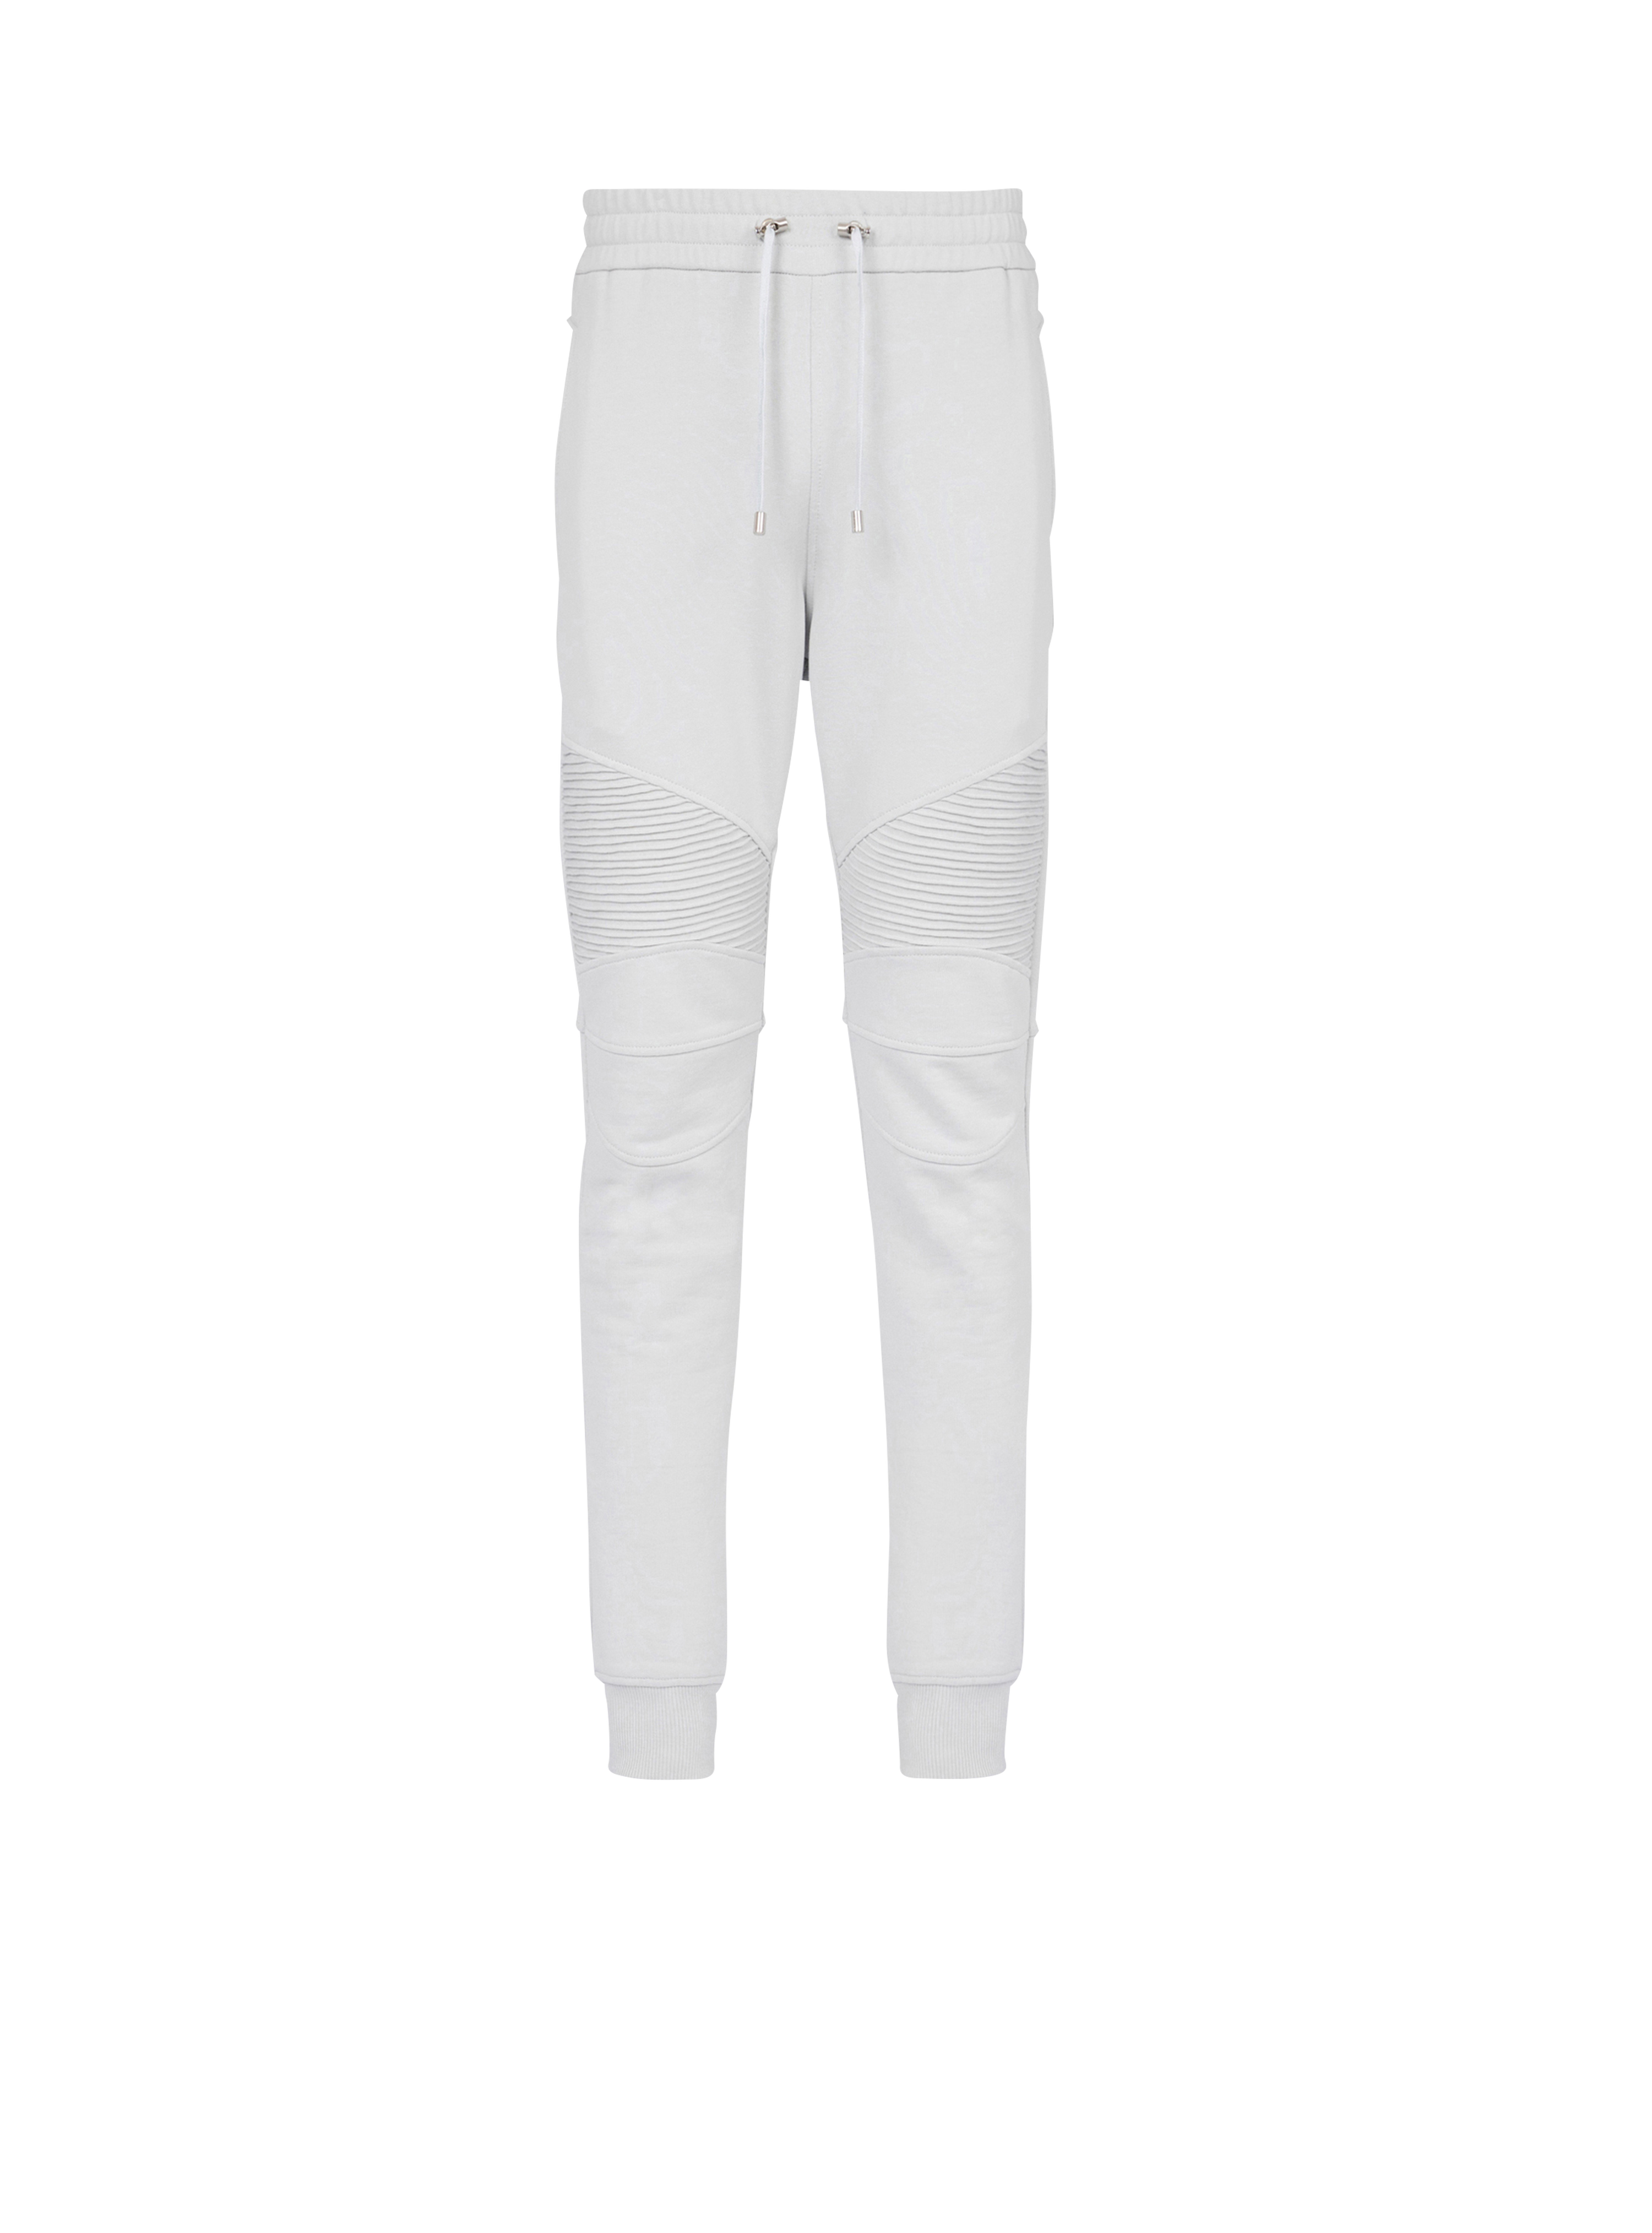 Eco-designed sweatpants with Balmain logo print, grey